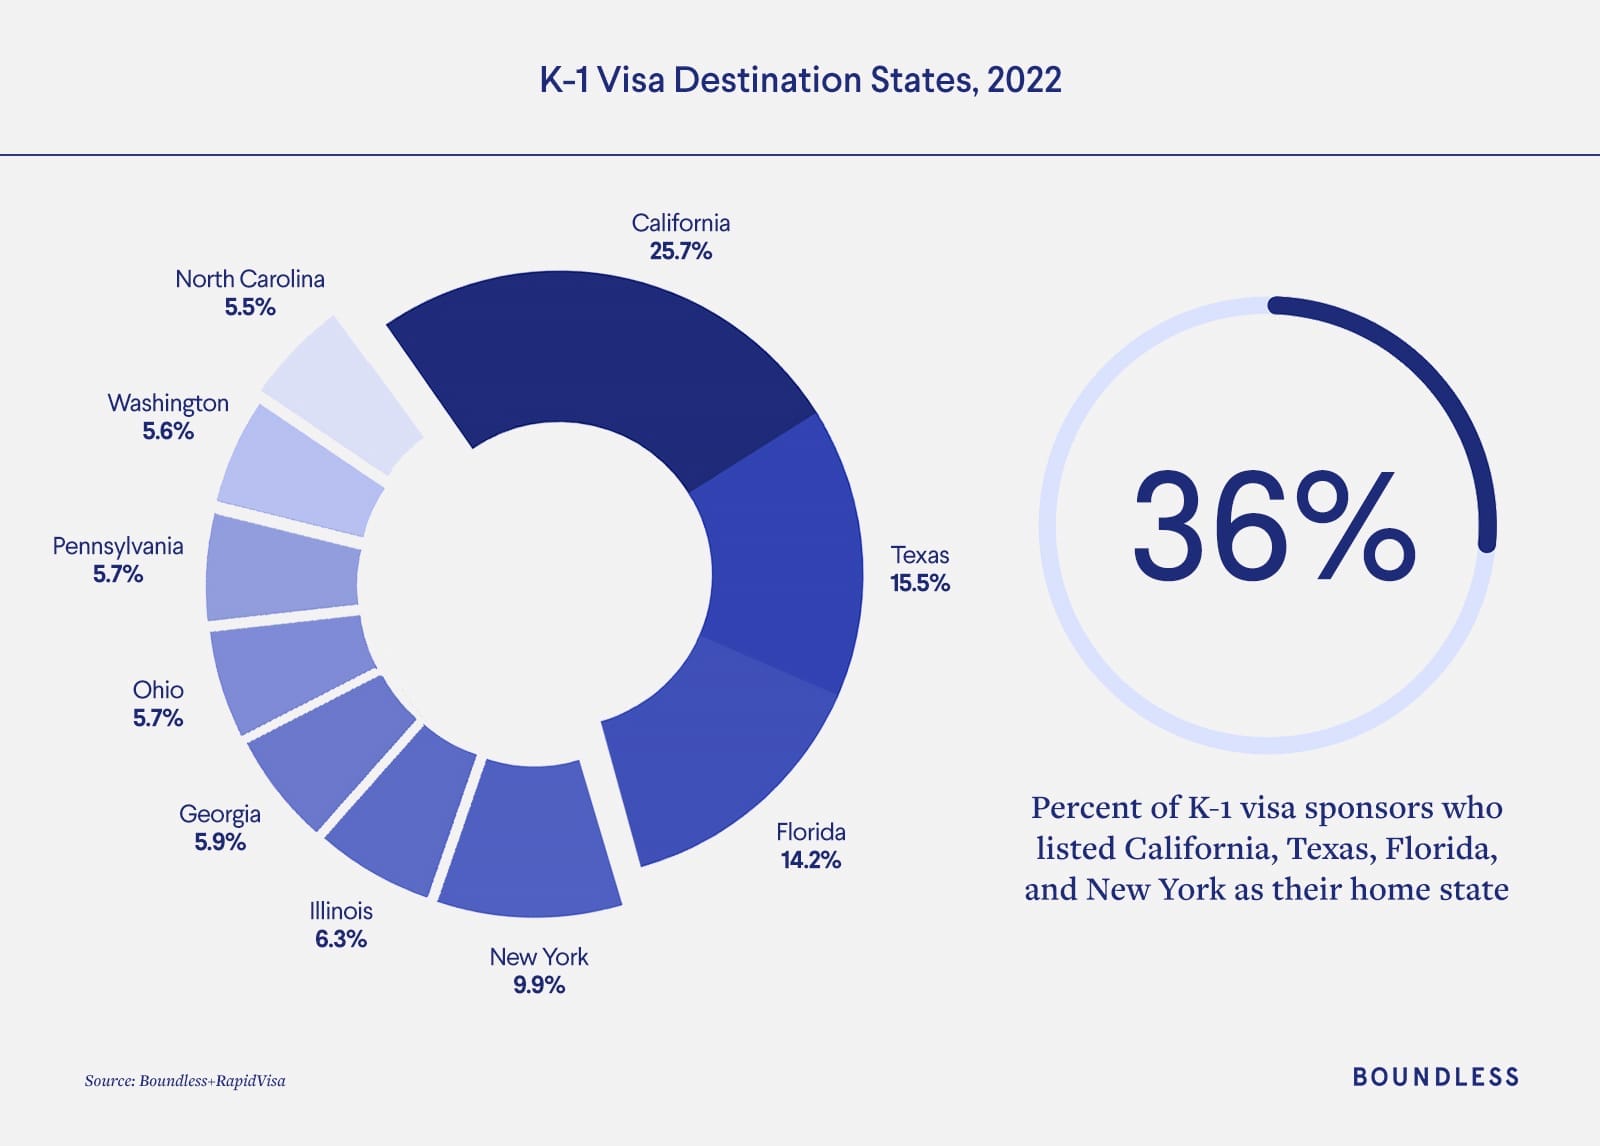 A chart showing the top K-1 visa destination states